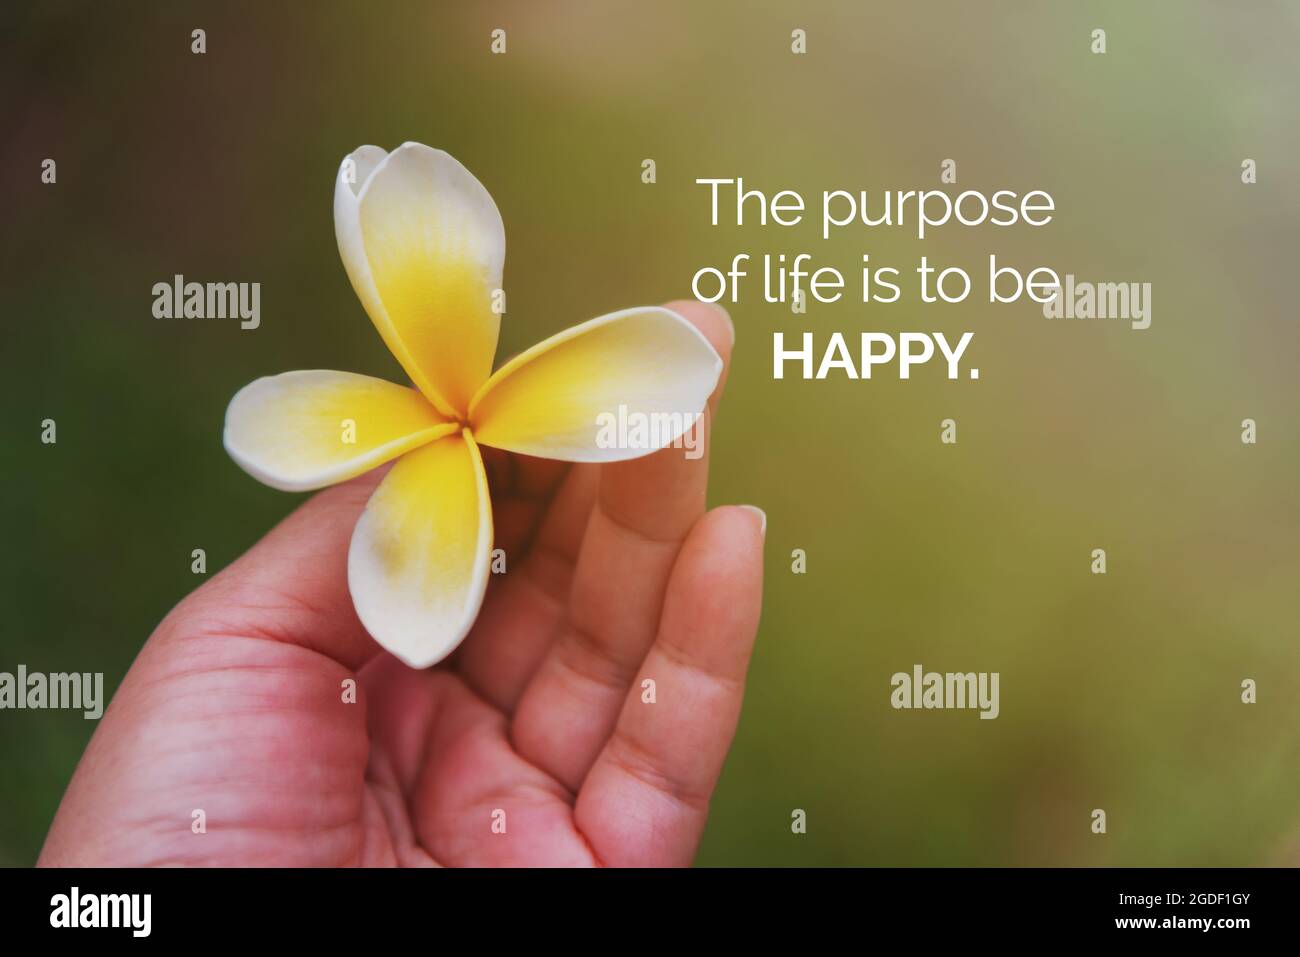 Citas motivacionales e inspiracionales - El propósito de la vida es ser feliz. Foto de stock